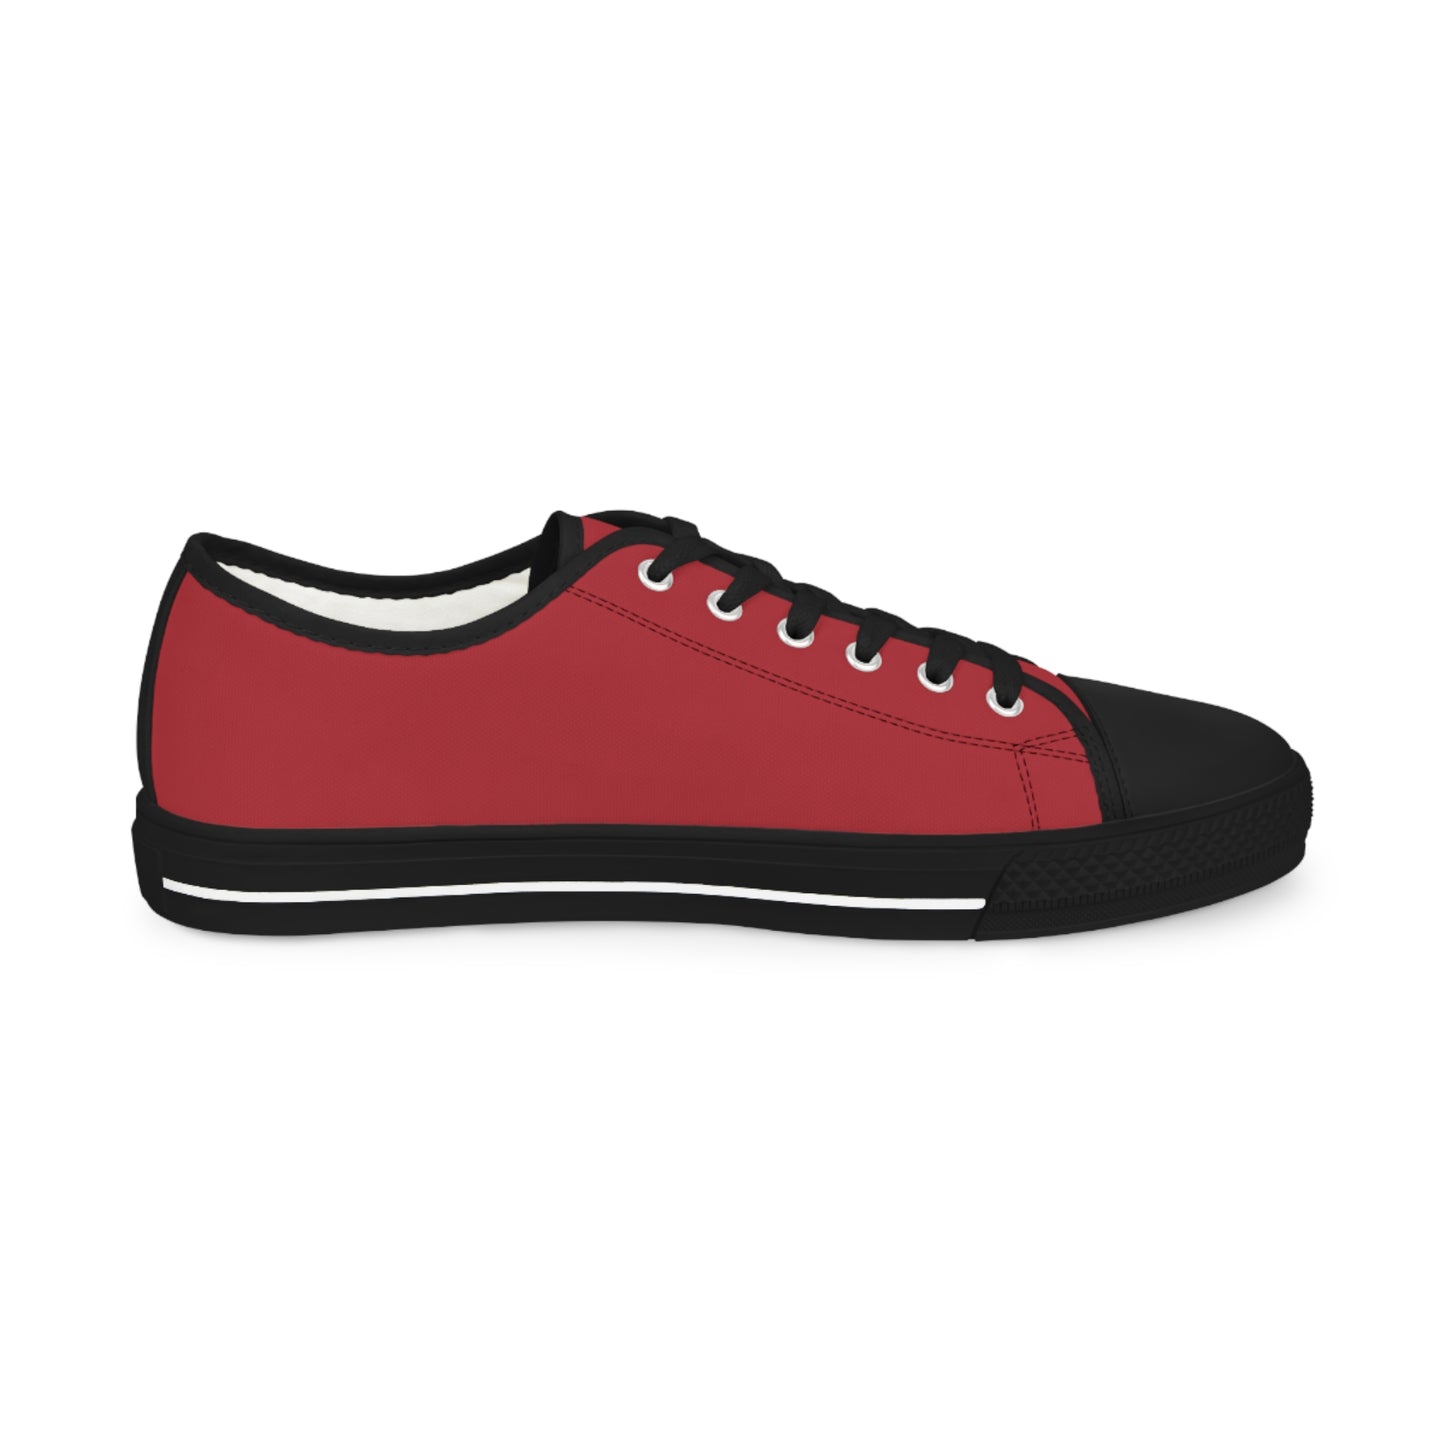 Men's Low Top Sneakers - Red US 14 Black sole